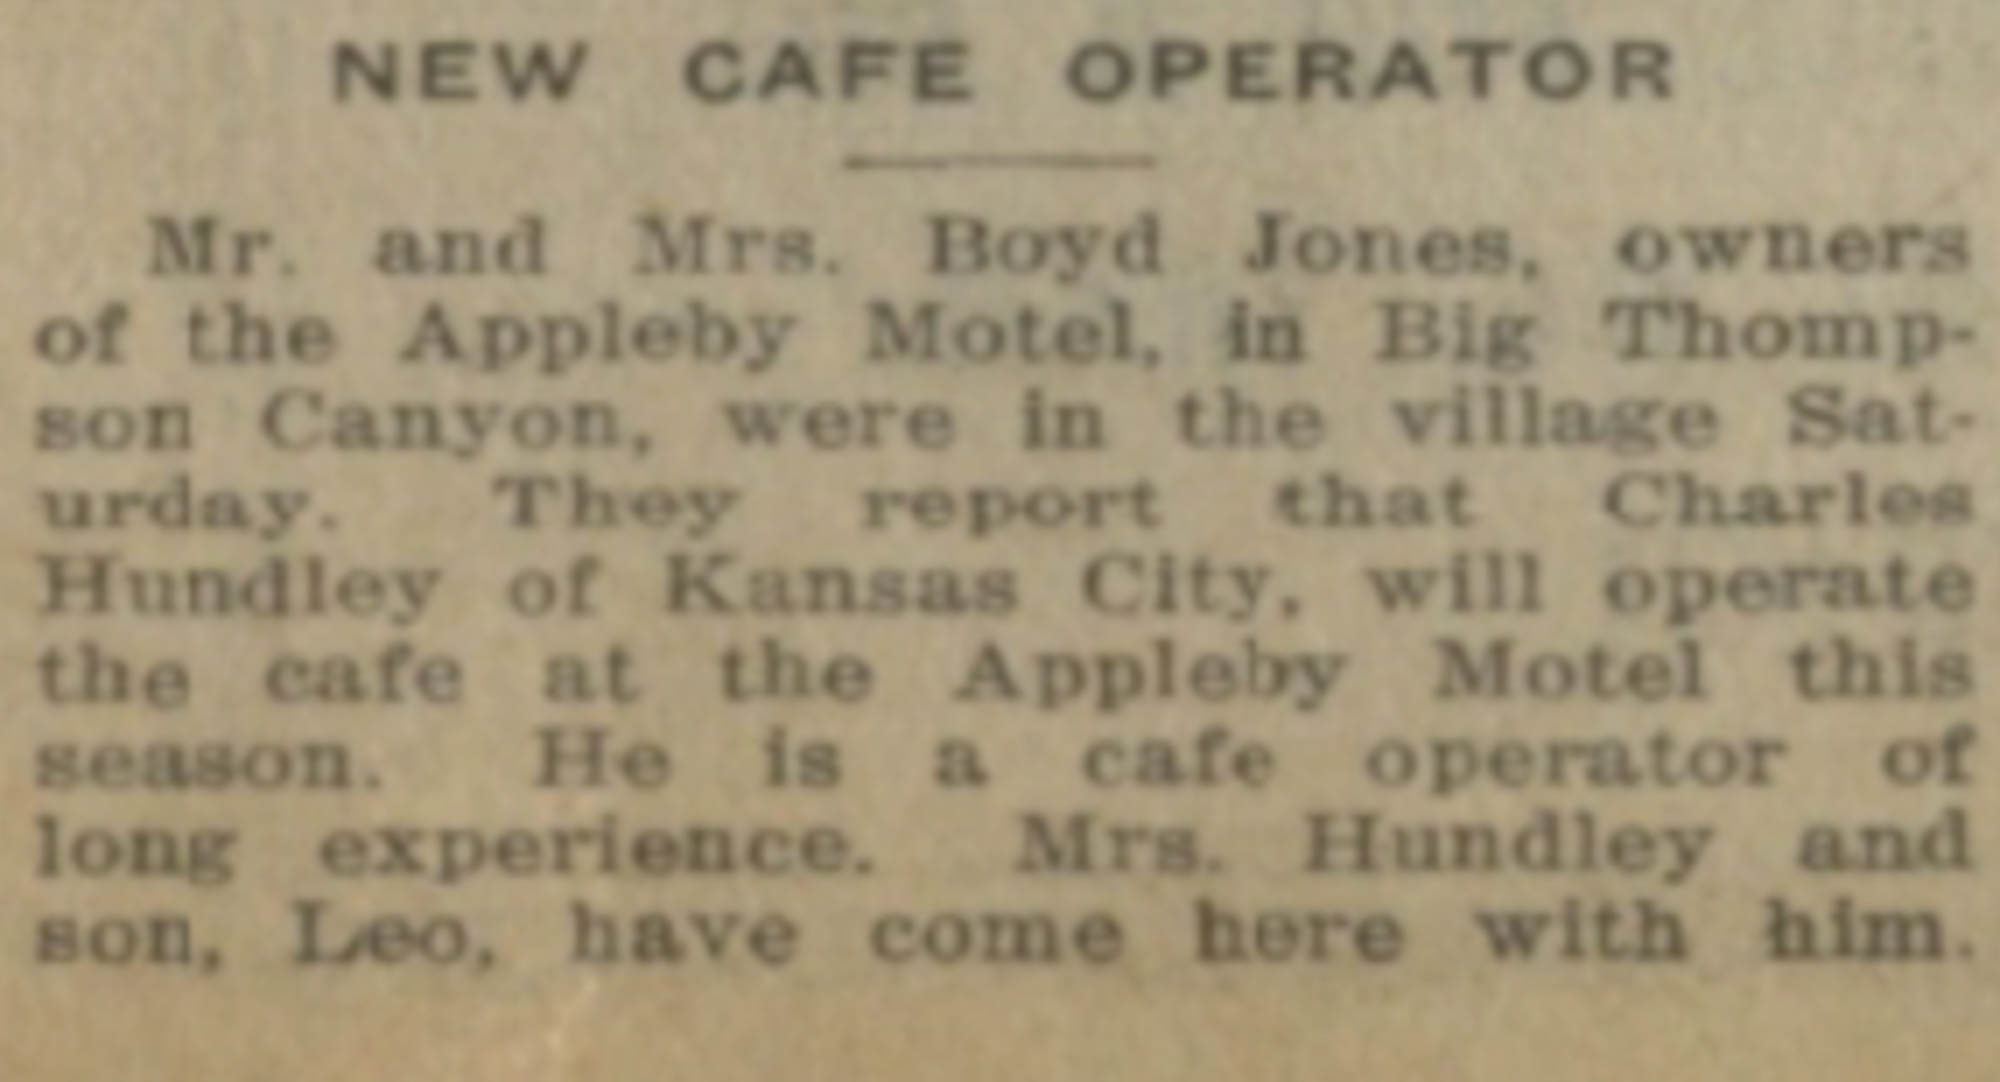 Idlewild Lodge - idlewildlodge.github.io - 1949-04-08 - The Estes Park Trail - Boyd Jones Appleby Cafe